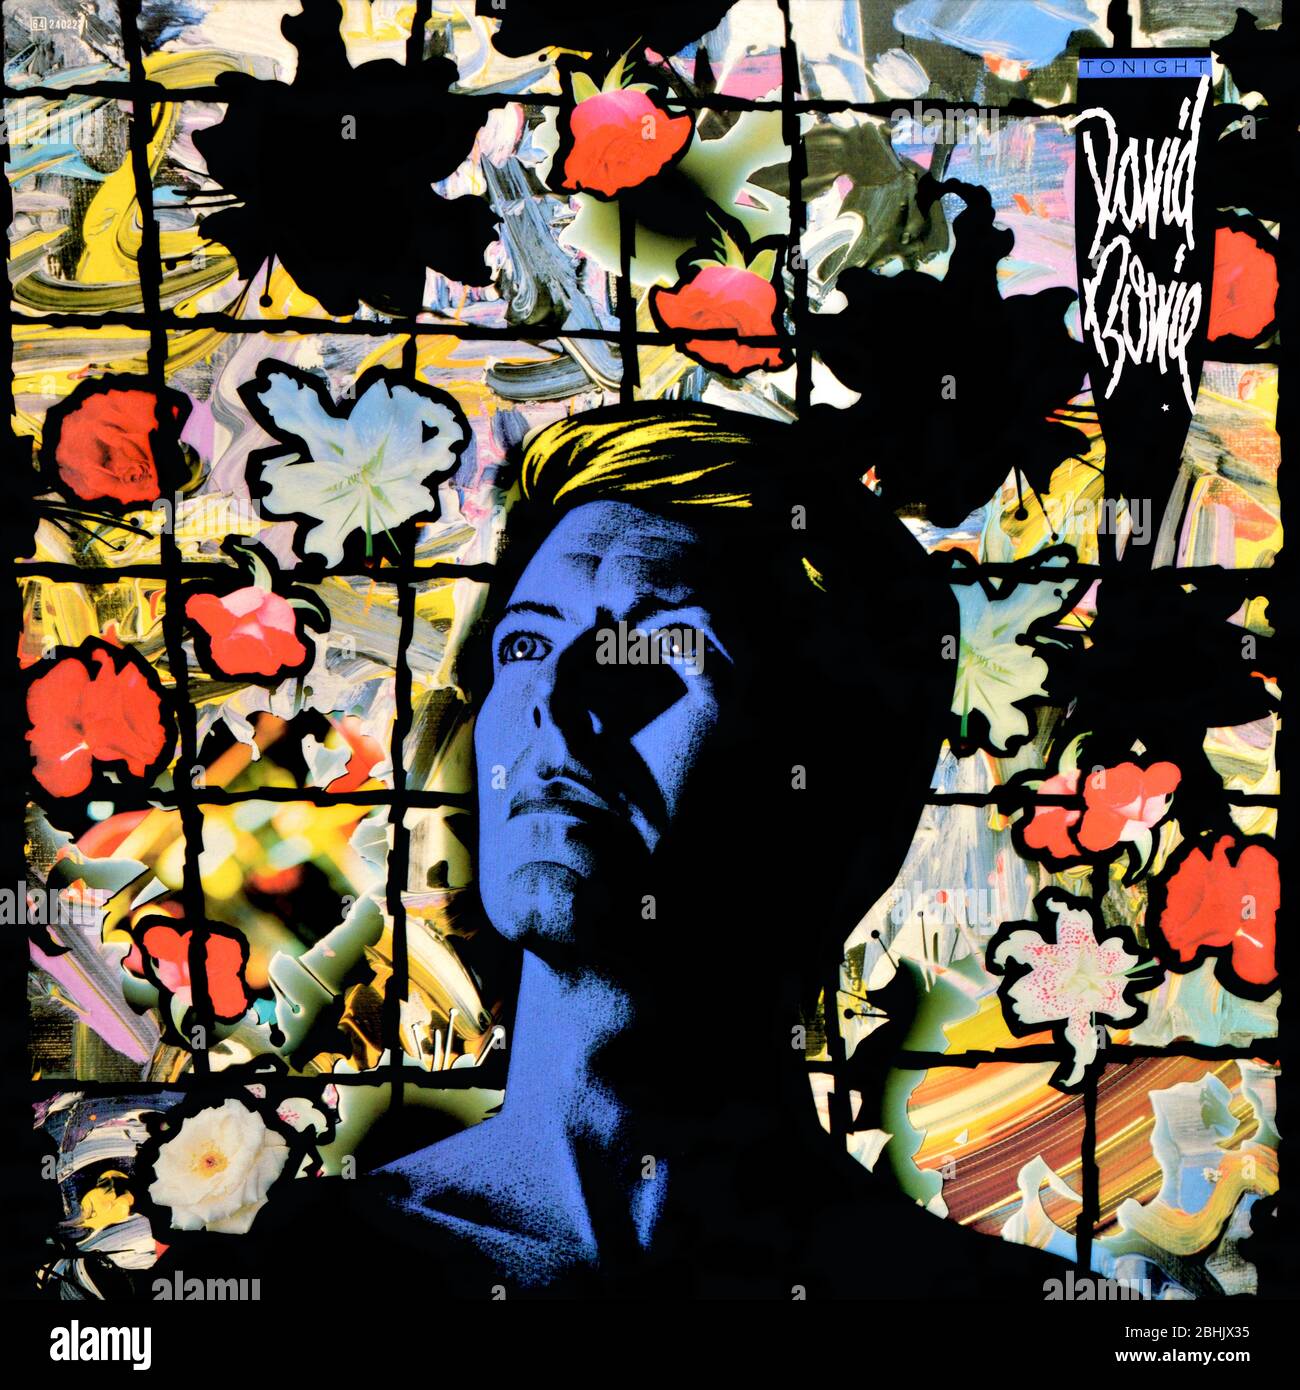 David Bowie - original Vinyl Album Cover - Tonight - 1984 Stockfoto